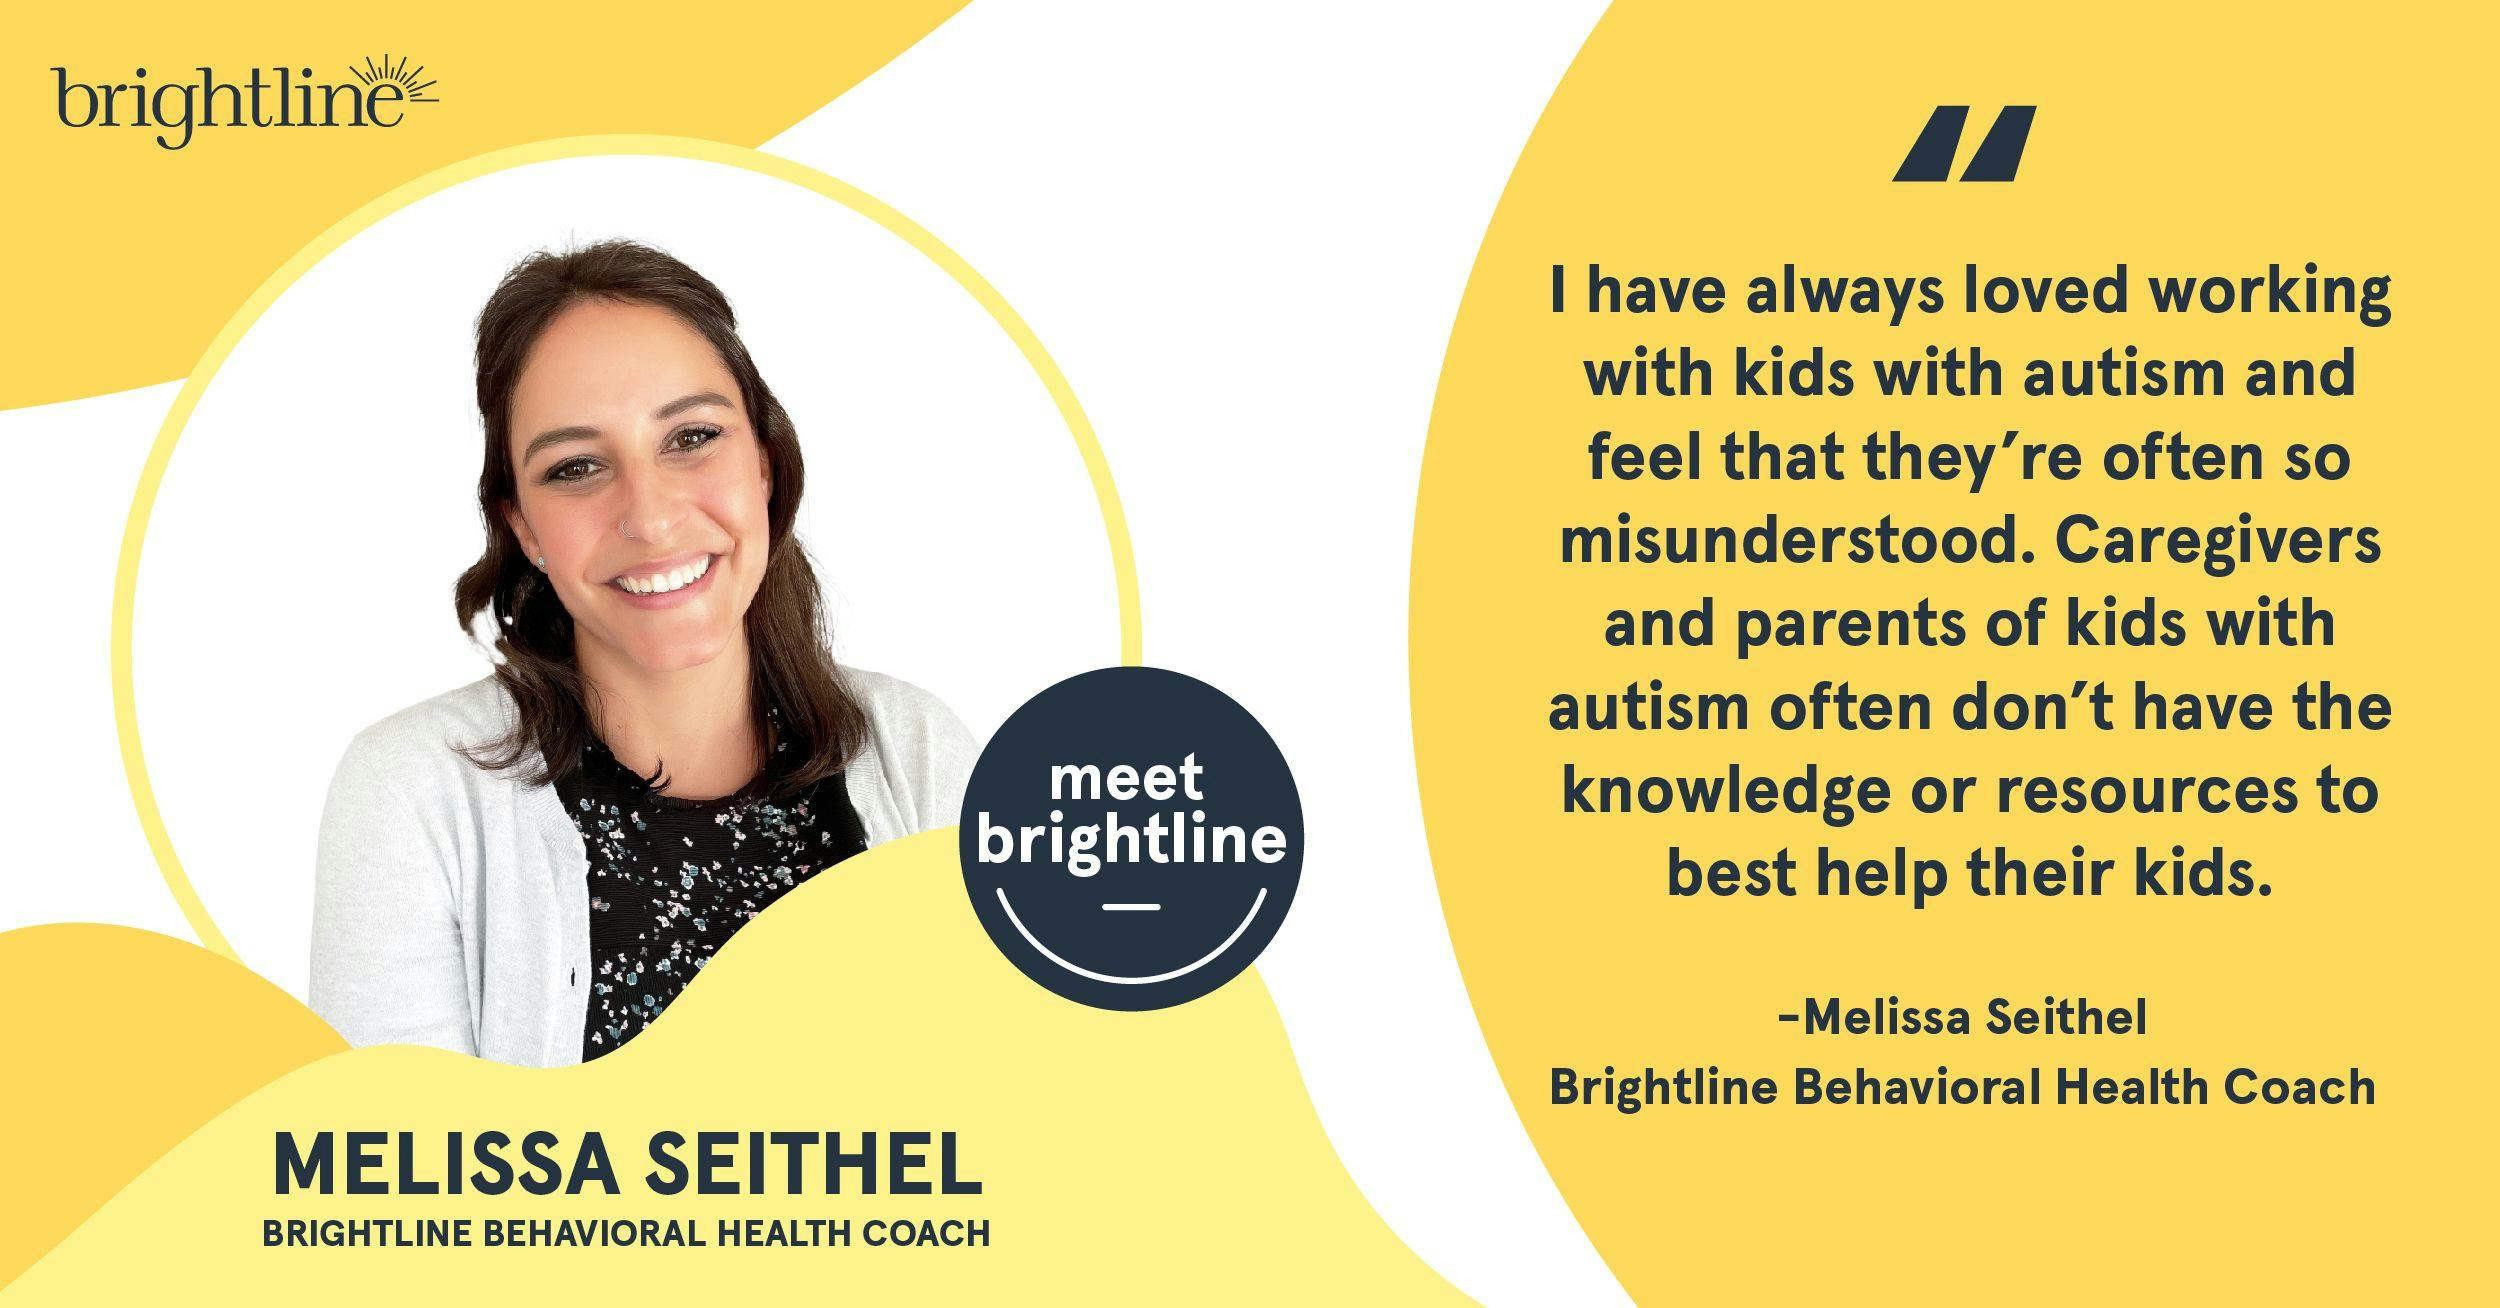 Brightline behavioral health coach Melissa Seithel 